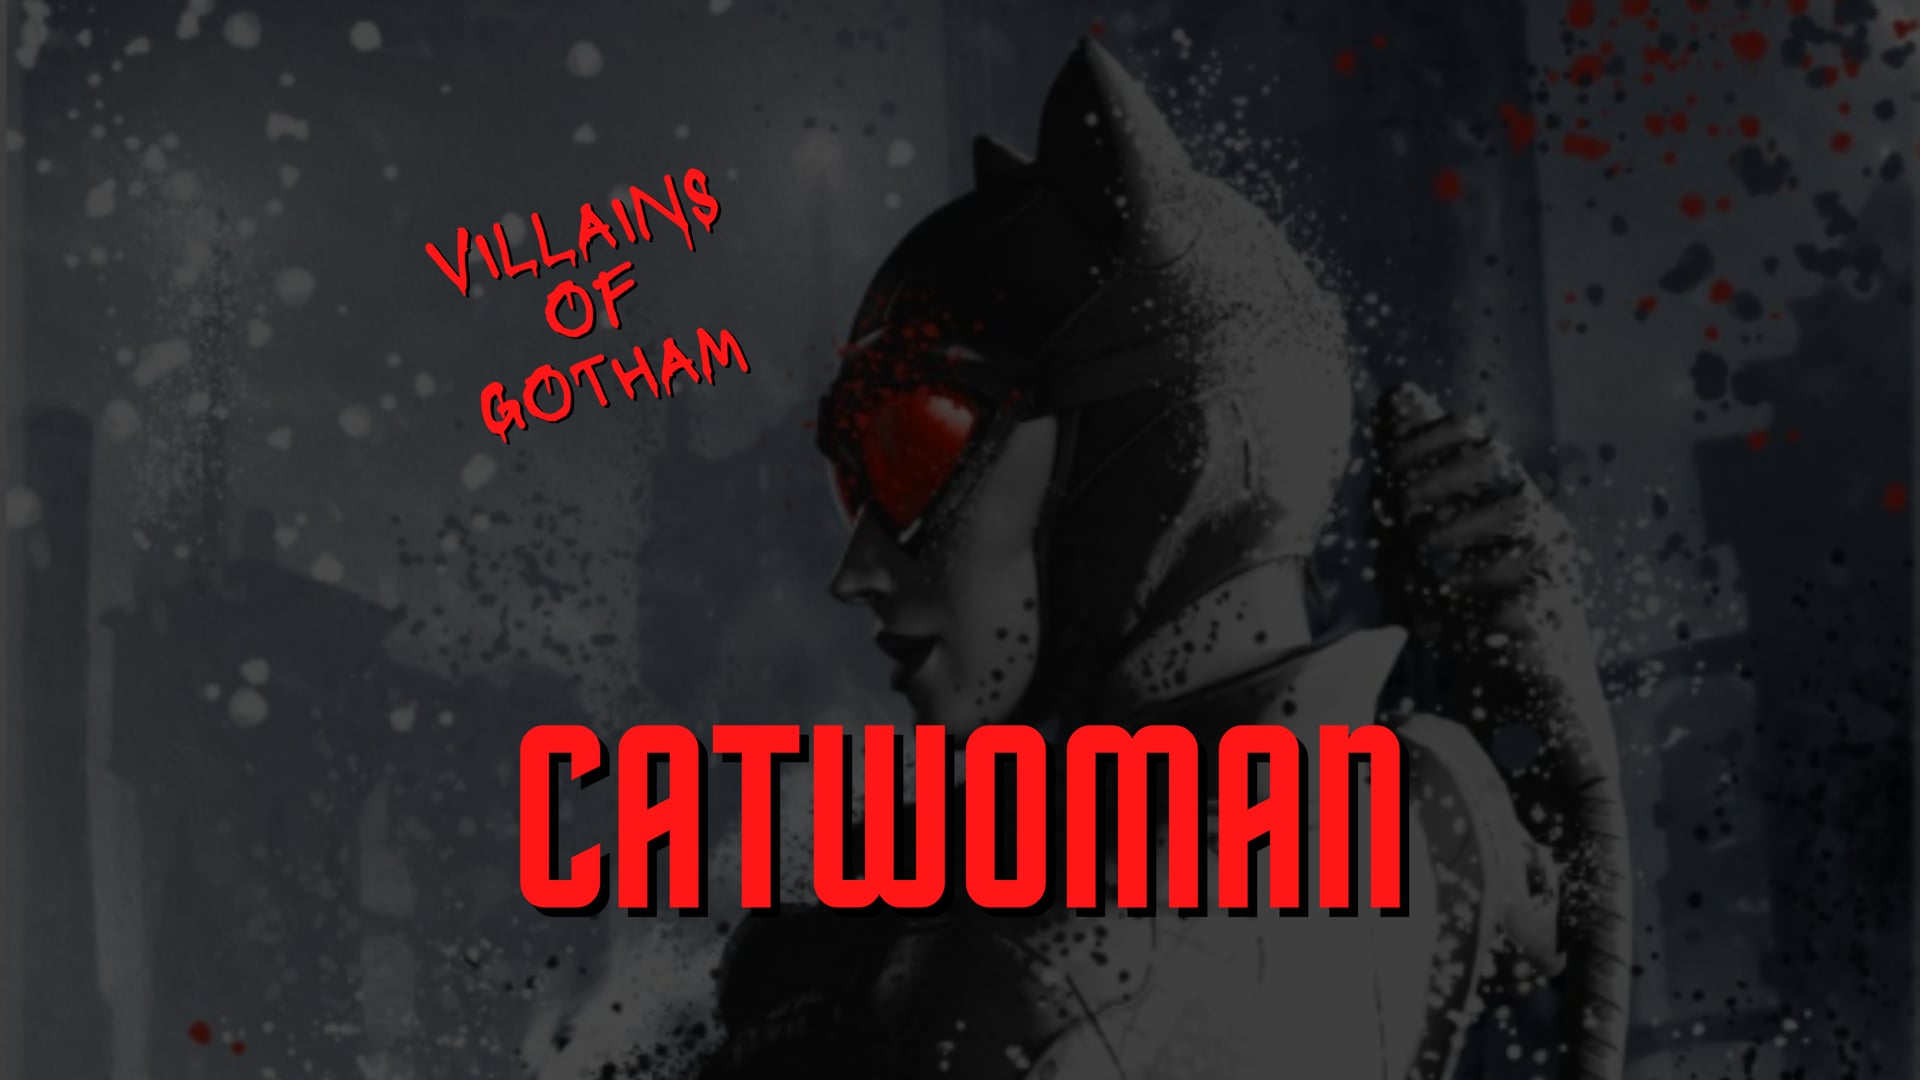 Villains of Gotham | Catwoman